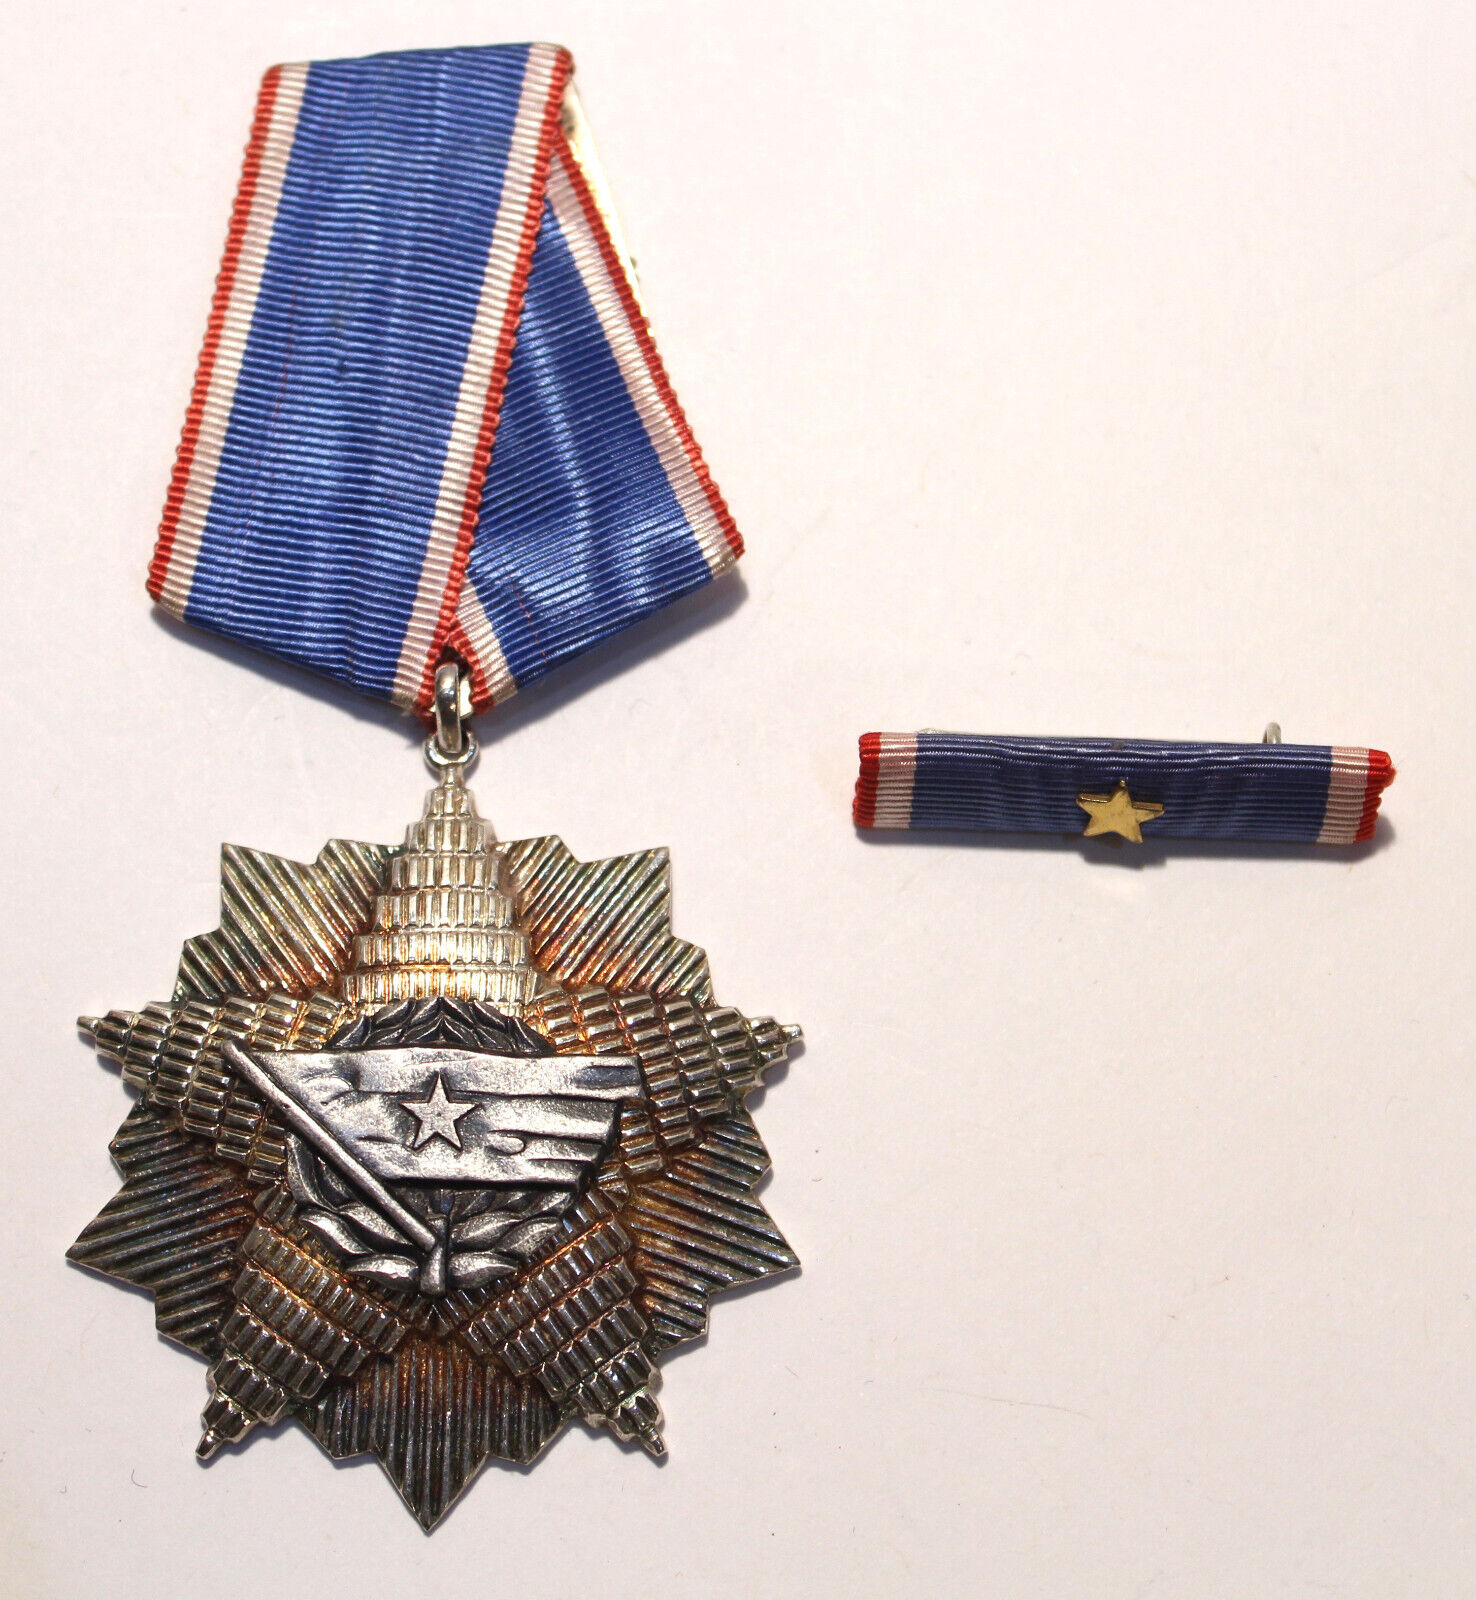 Yugslavia SFRJ medal Order of the Yugoslav Flag 5th Class with ribbon bar